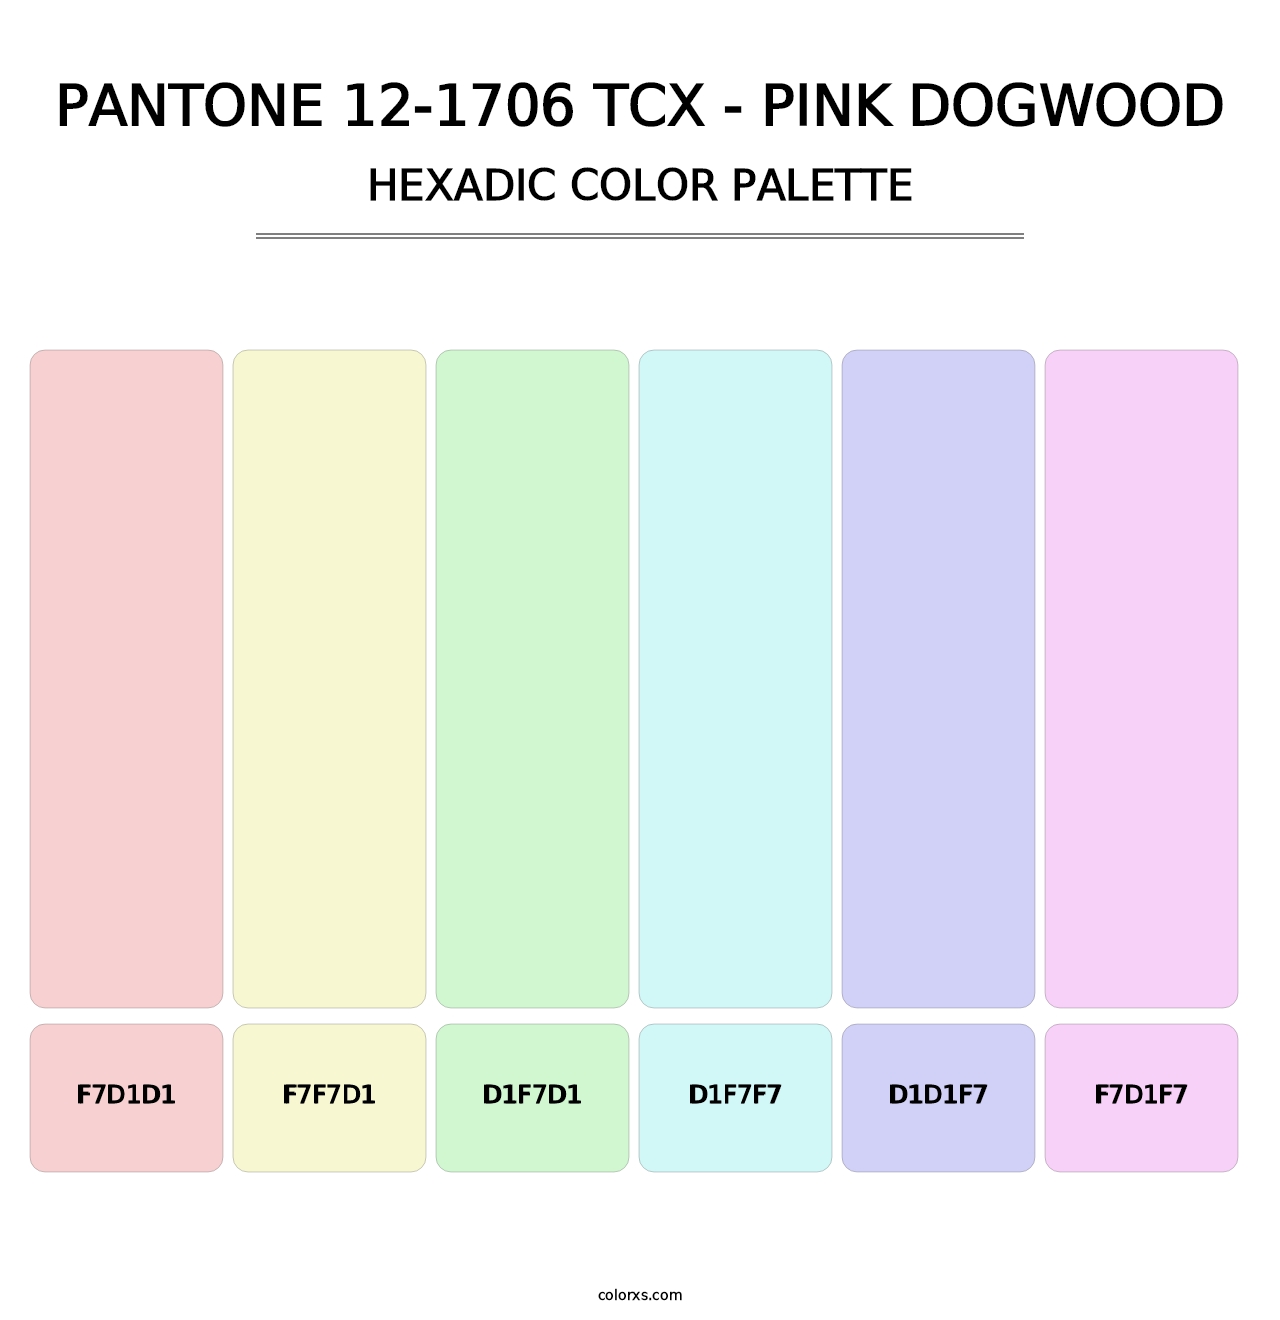 PANTONE 12-1706 TCX - Pink Dogwood - Hexadic Color Palette